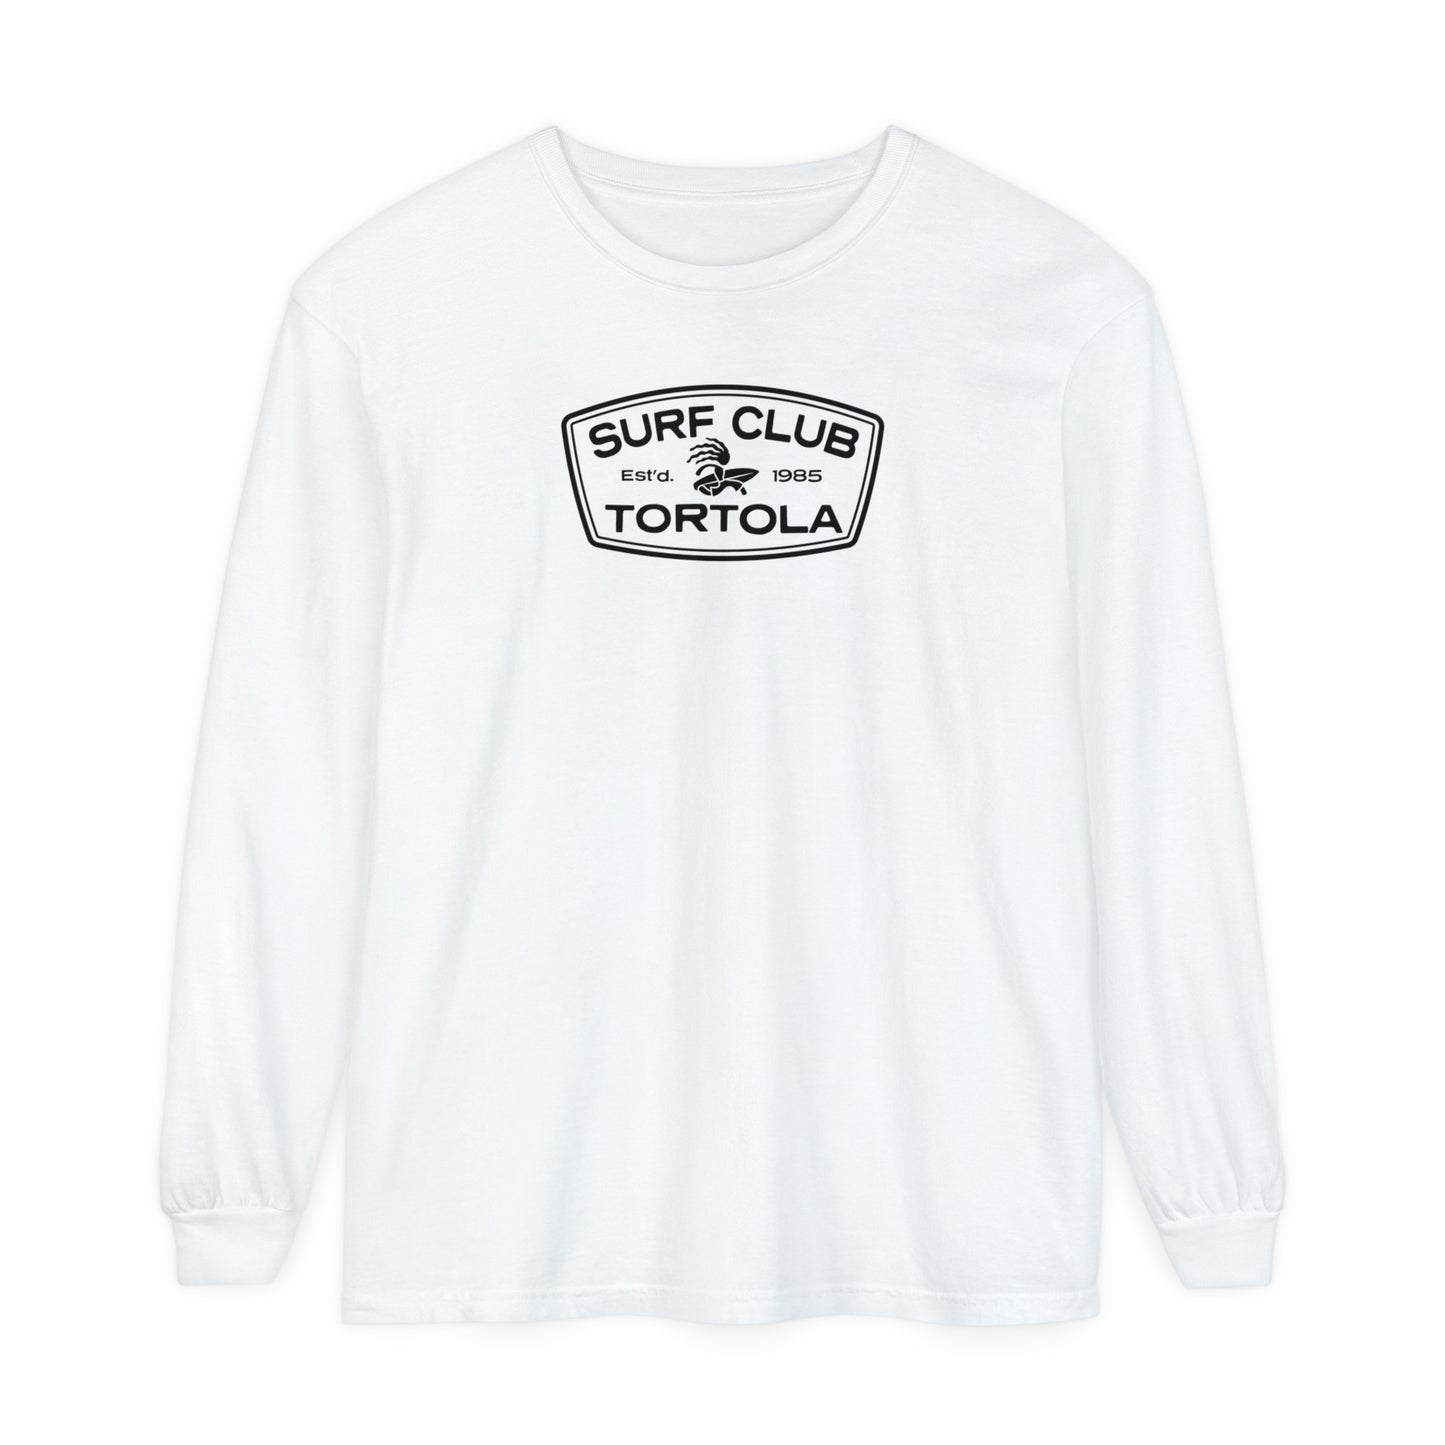 "Surf Club Tortola" Unisex Garment-dyed Long Sleeve T-Shirt